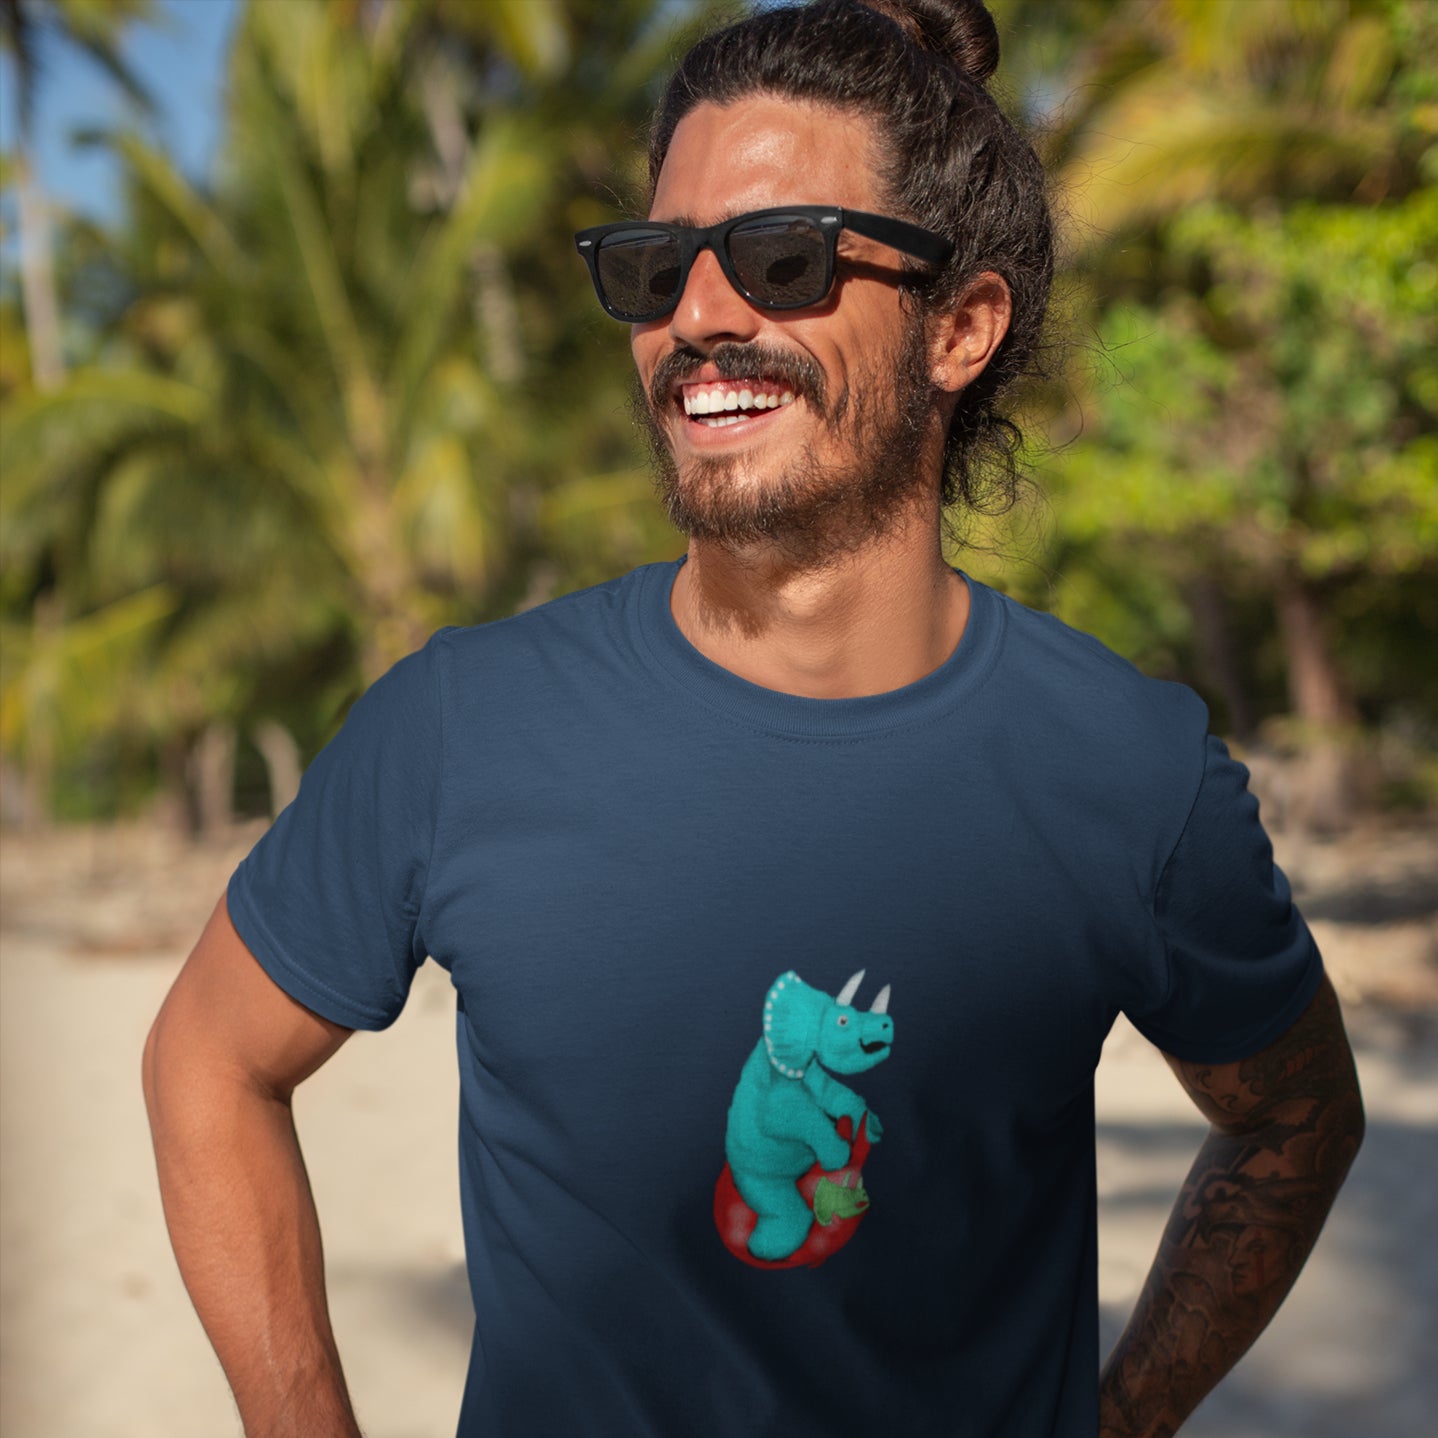 Dinosaur Space Hopper | 100% Organic Cotton T Shirt worn by a man